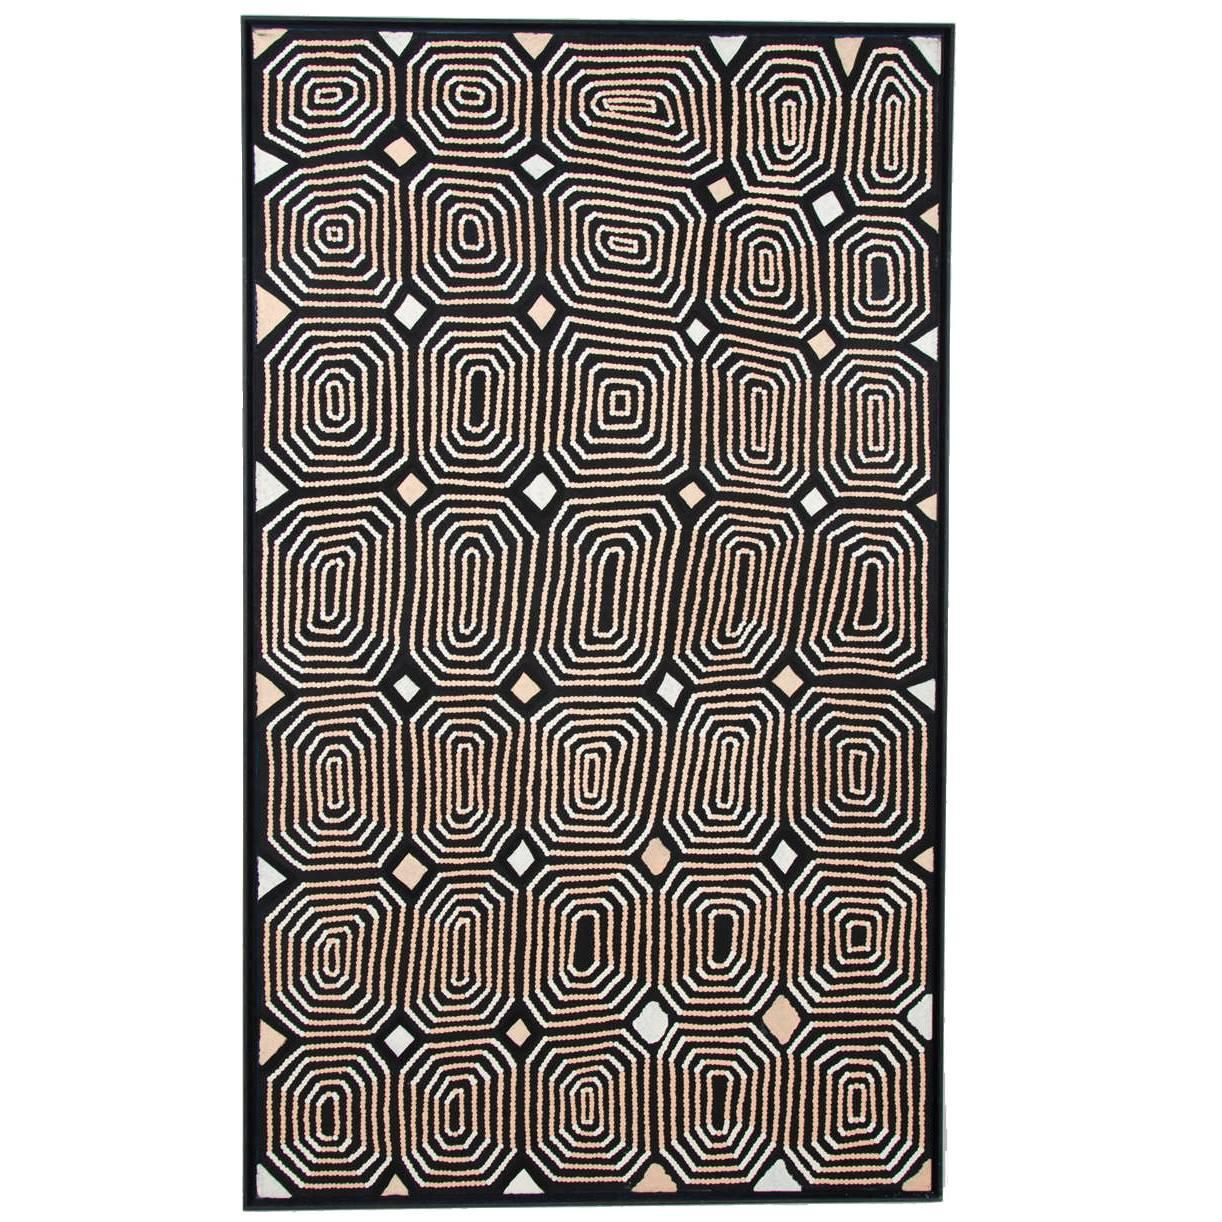 'Itilangi Tjukurpa', Australian Aboriginal Painting, monochrome pattern